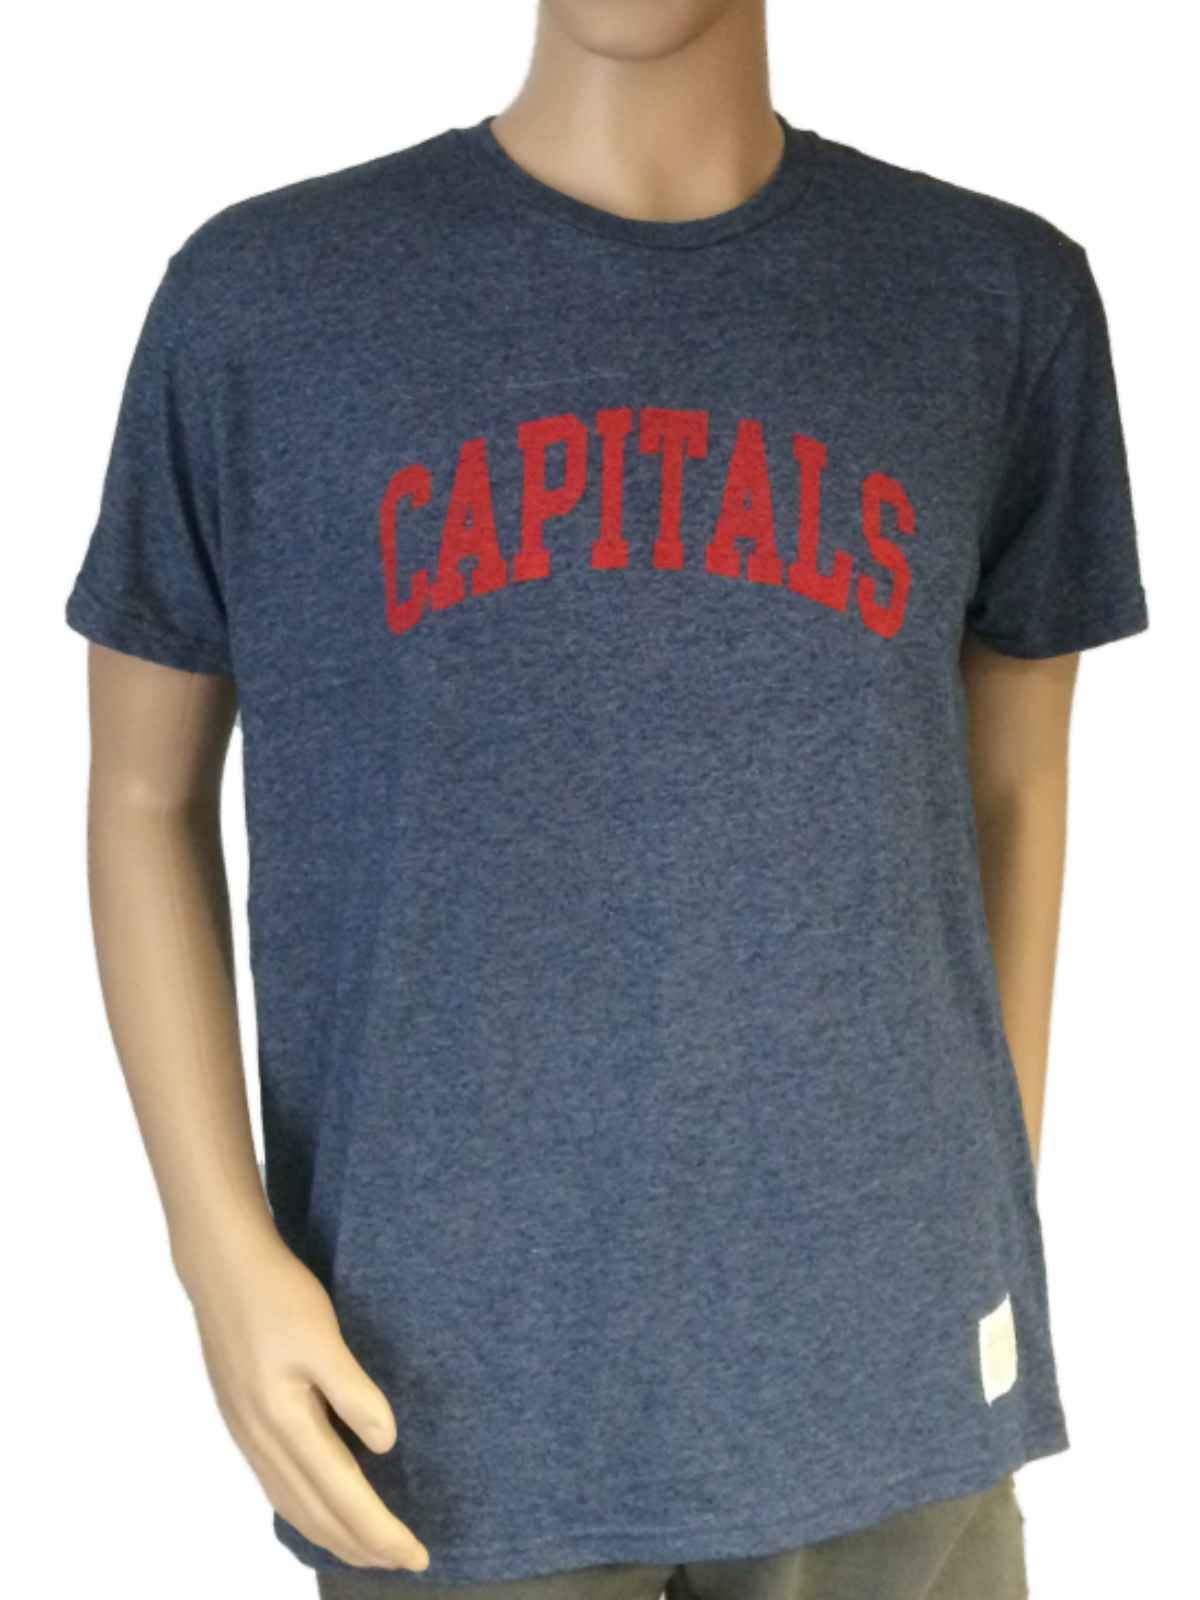 Washington Capitals Retro Brand Navy Tri-Blend Short Sleeve T-Shirt (S)